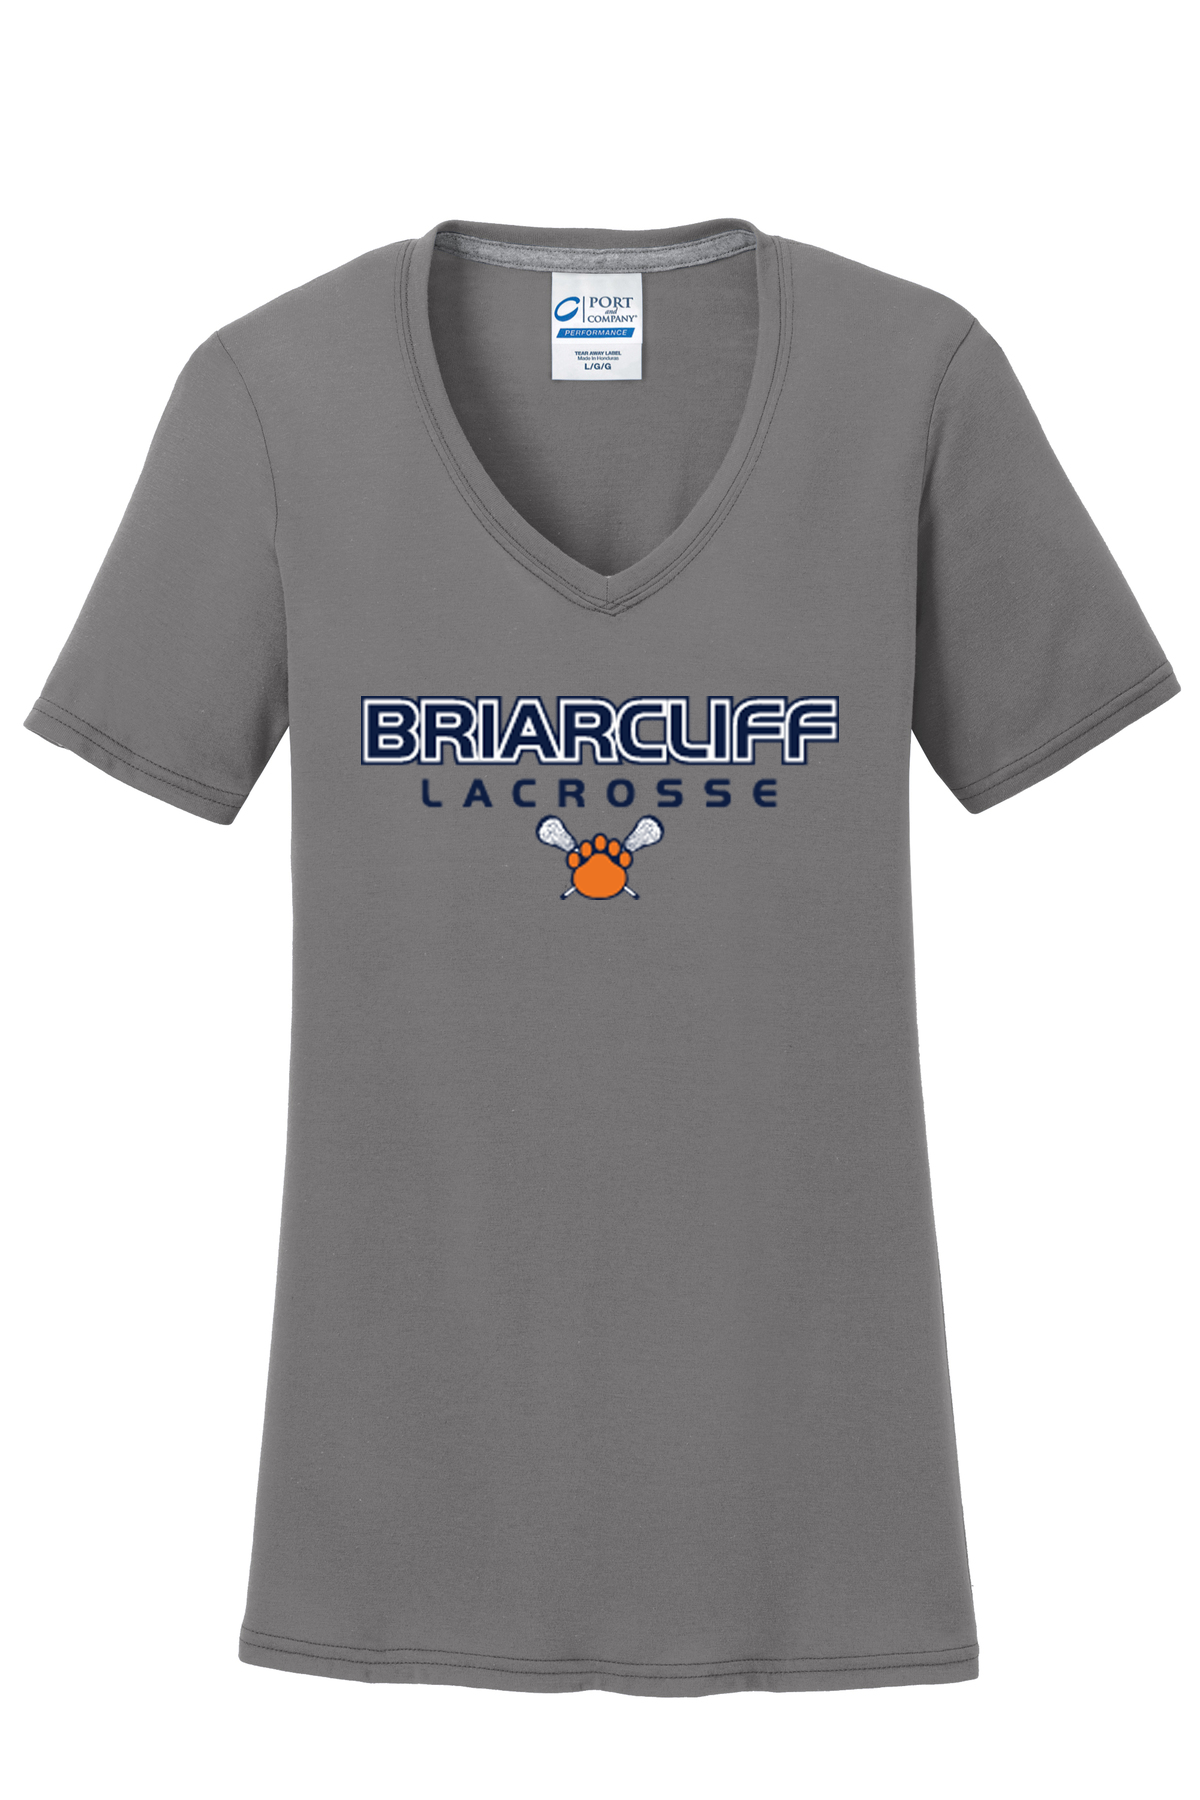 Briarcliff Lacrosse Grey Women's T-Shirt